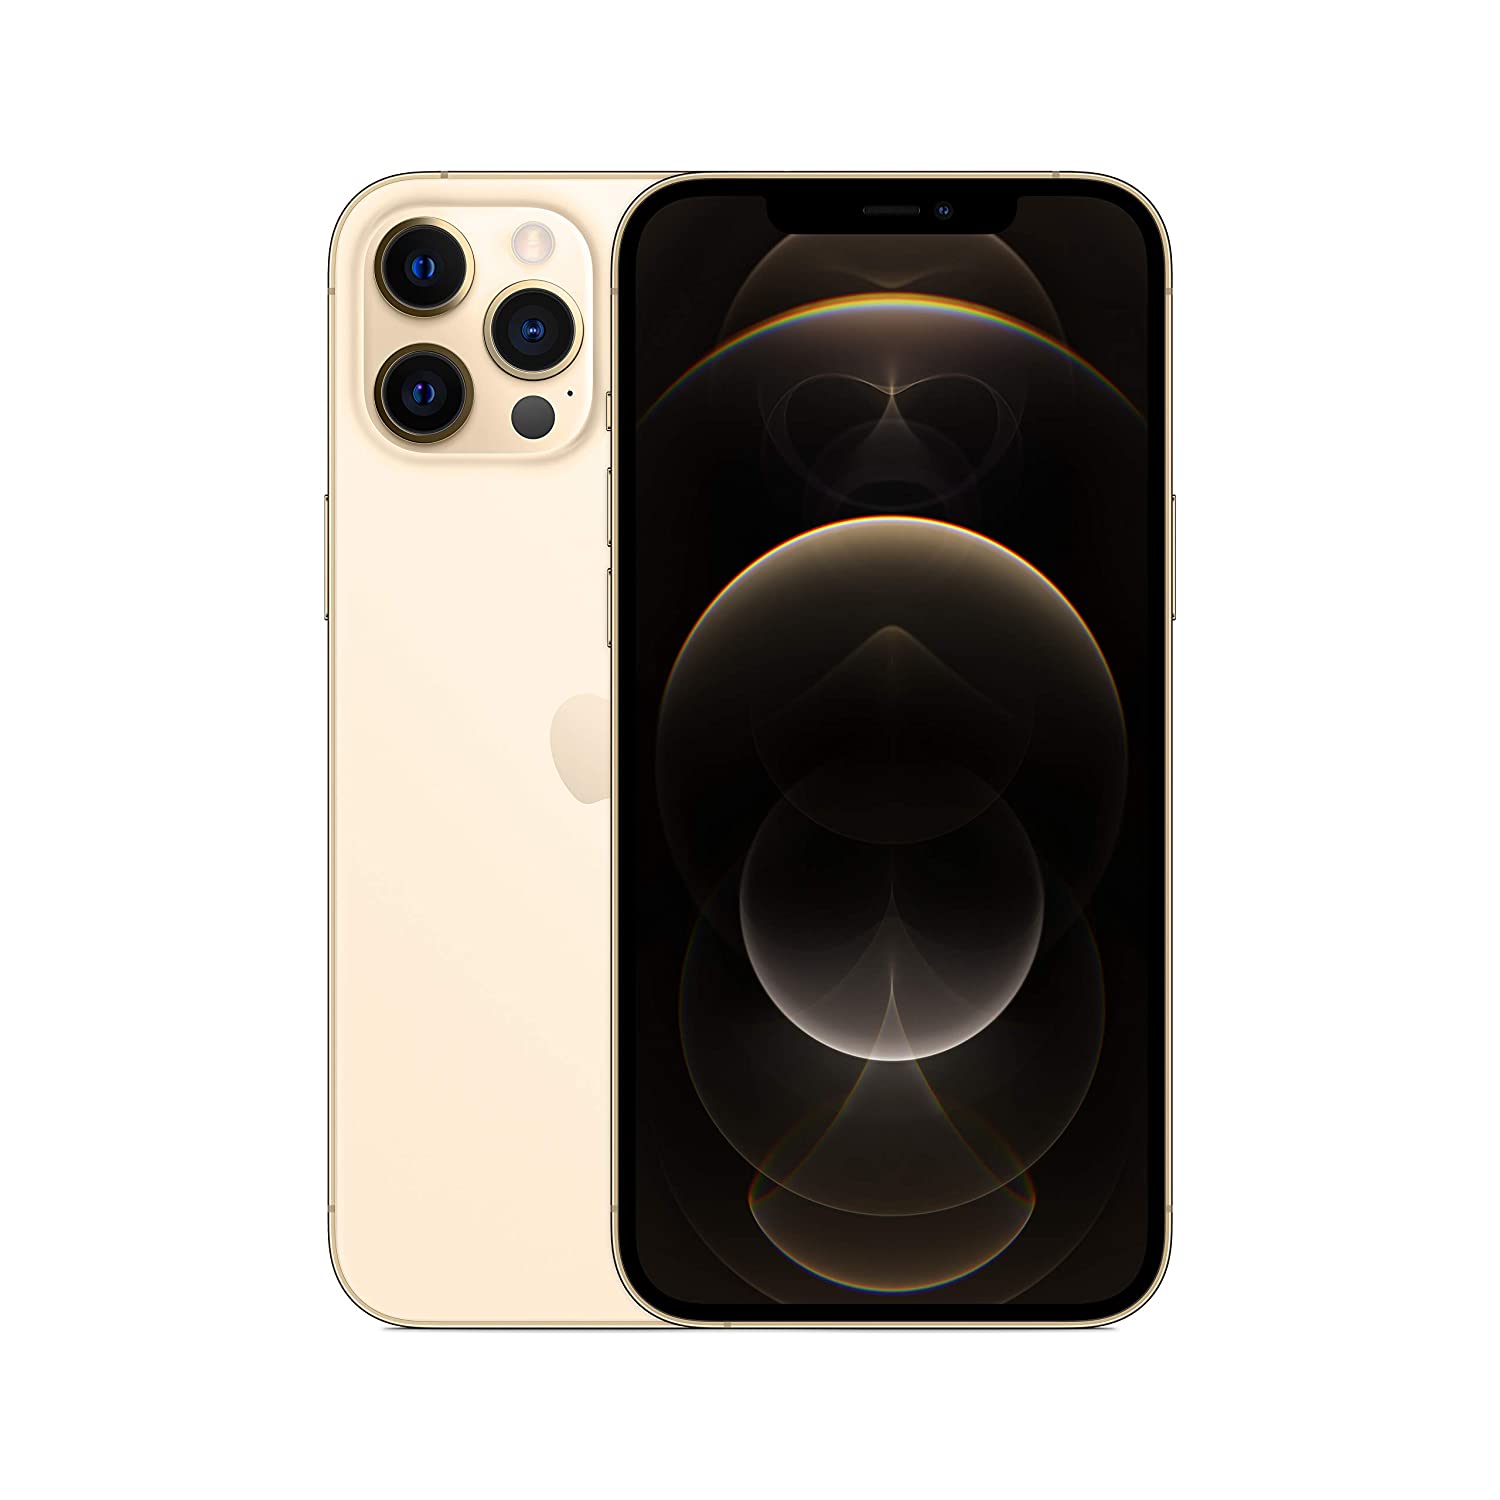 Apple iPhone 12 Pro Max (128GB) - Gold